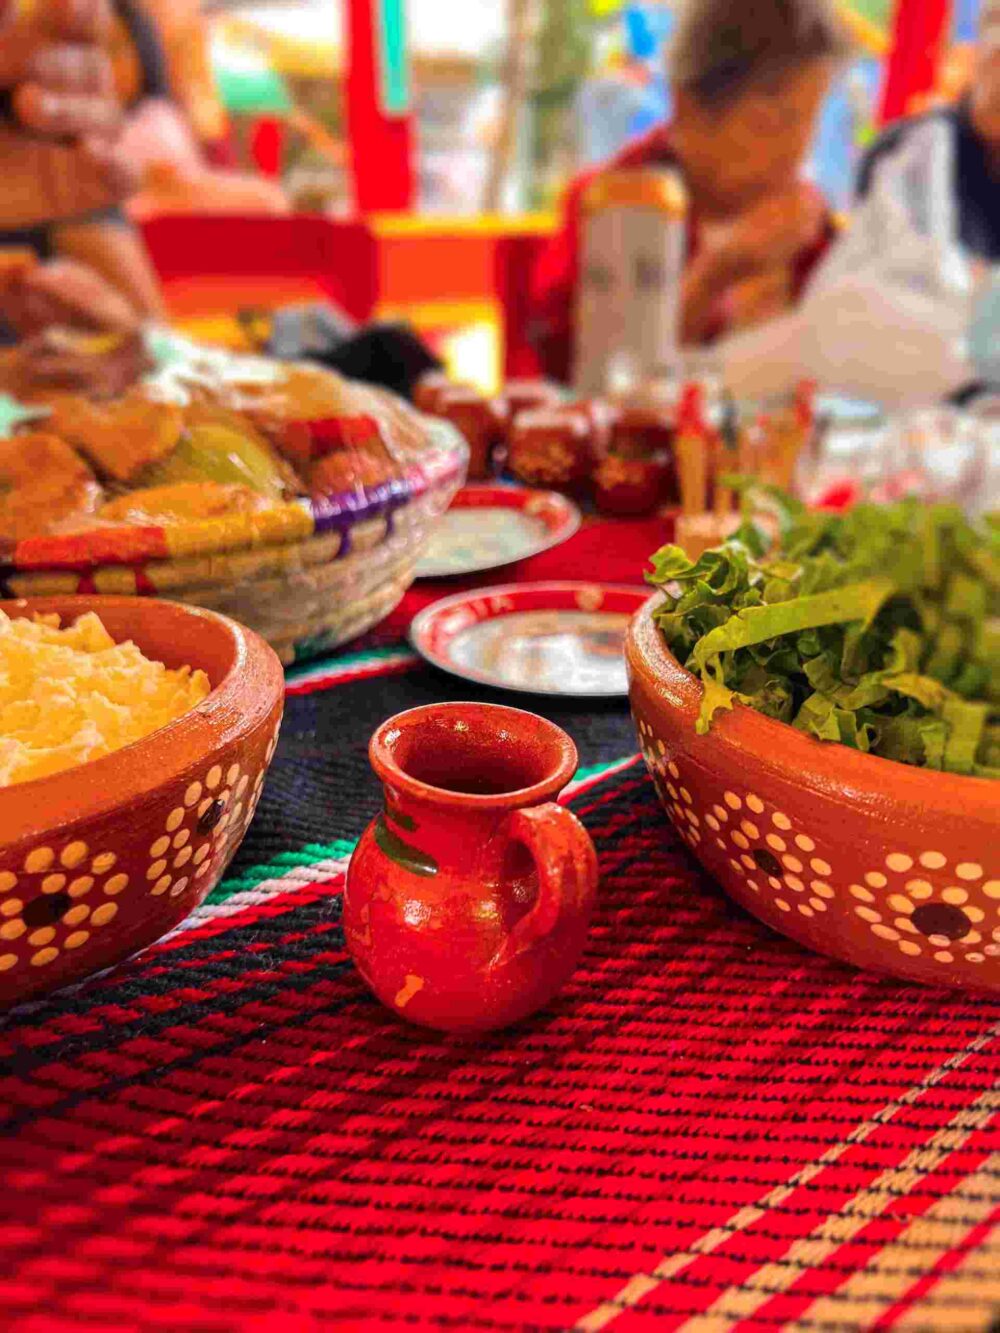 Bảie - A Culinary Tradition and Cultural Emblem